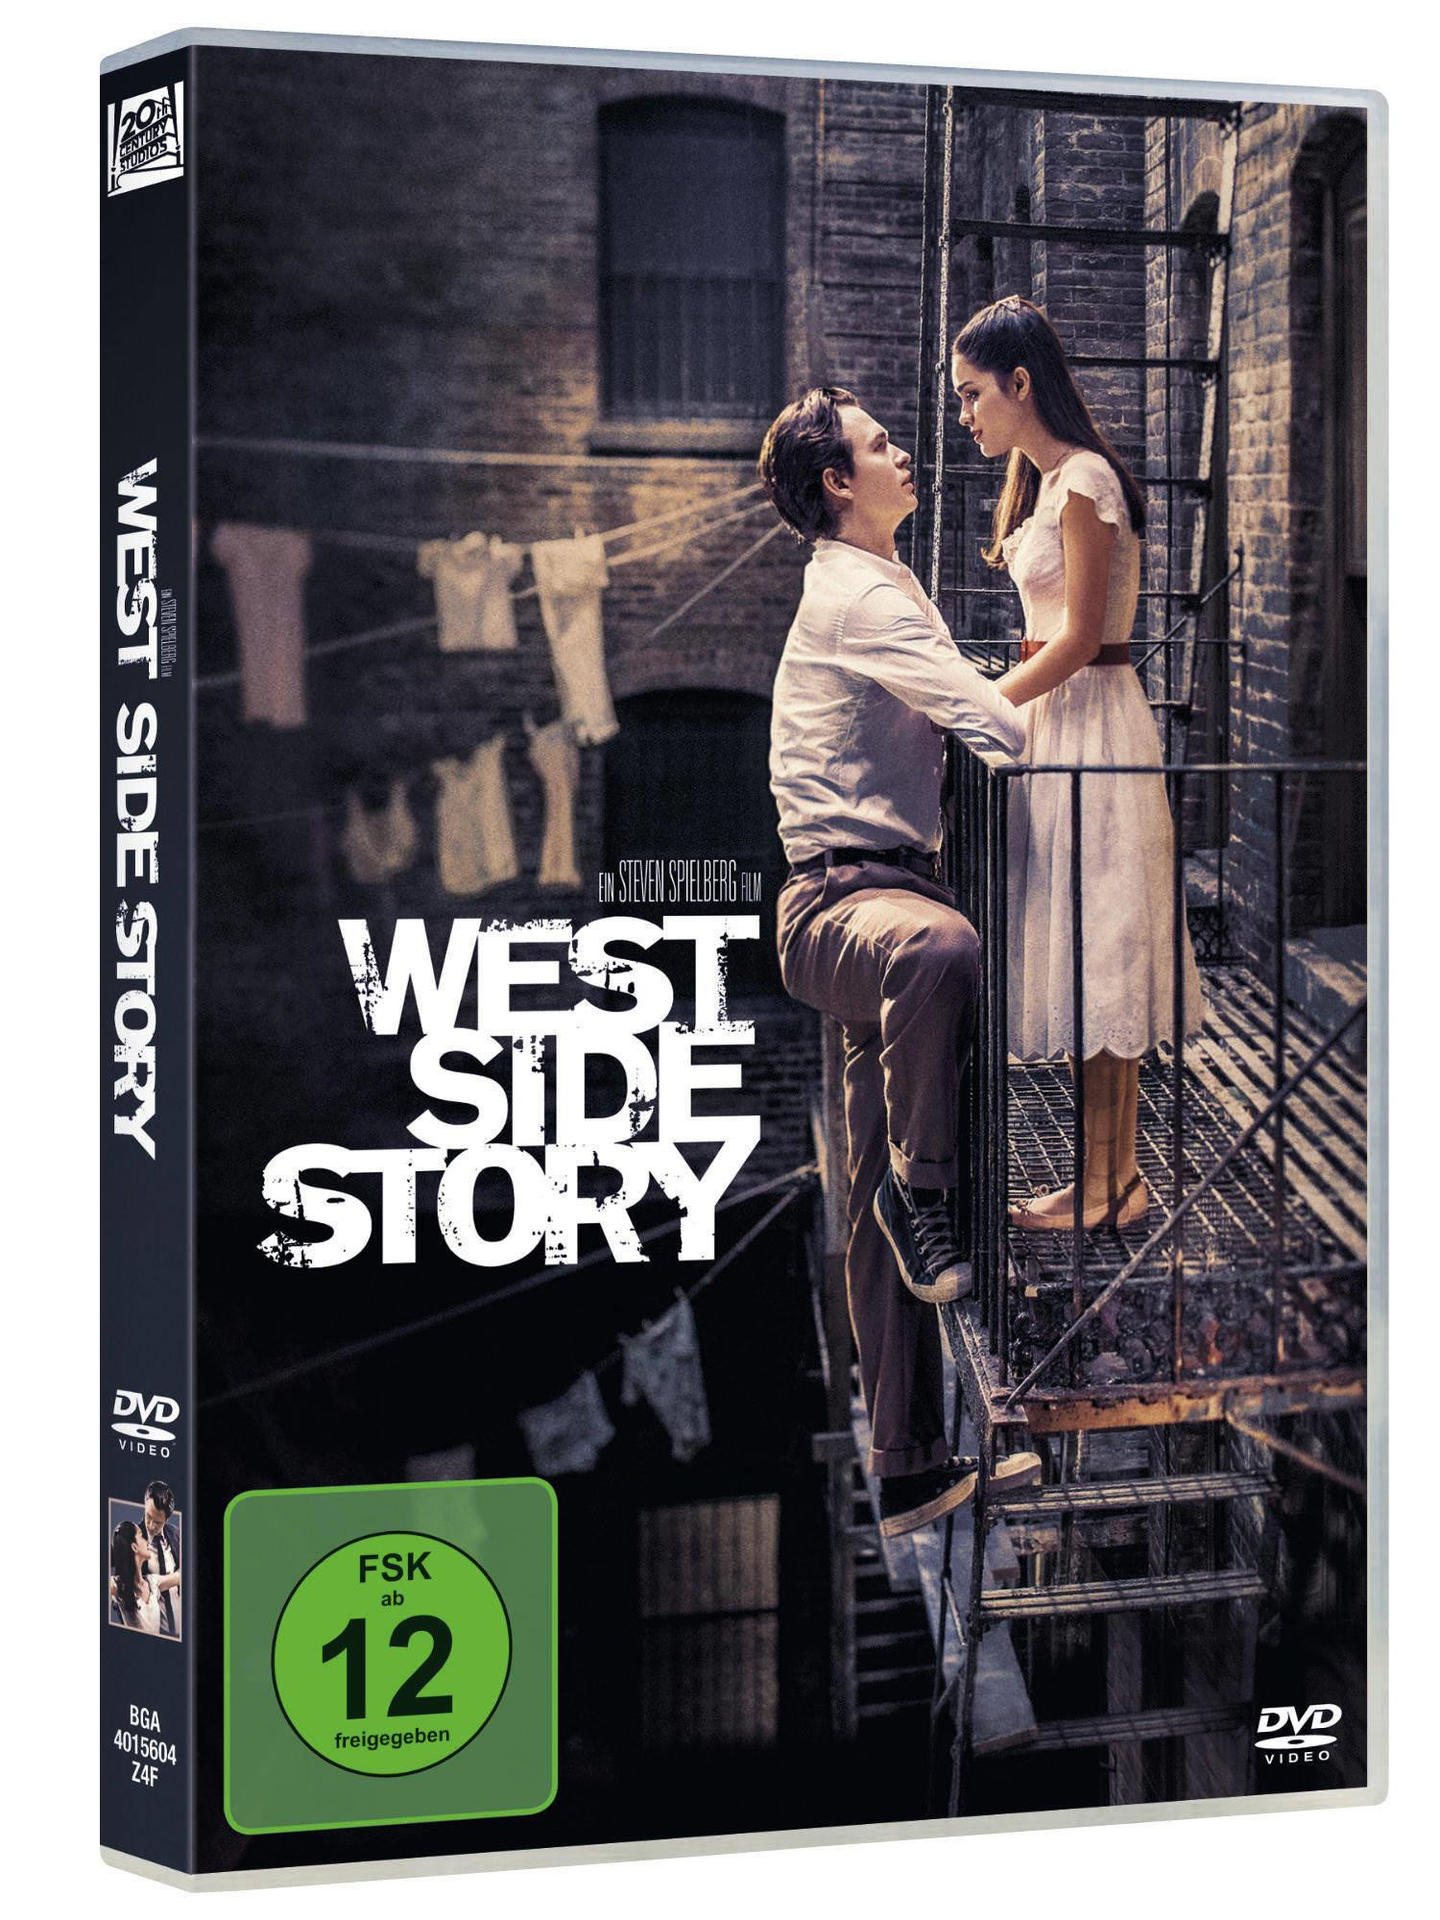 West DVD Story Side